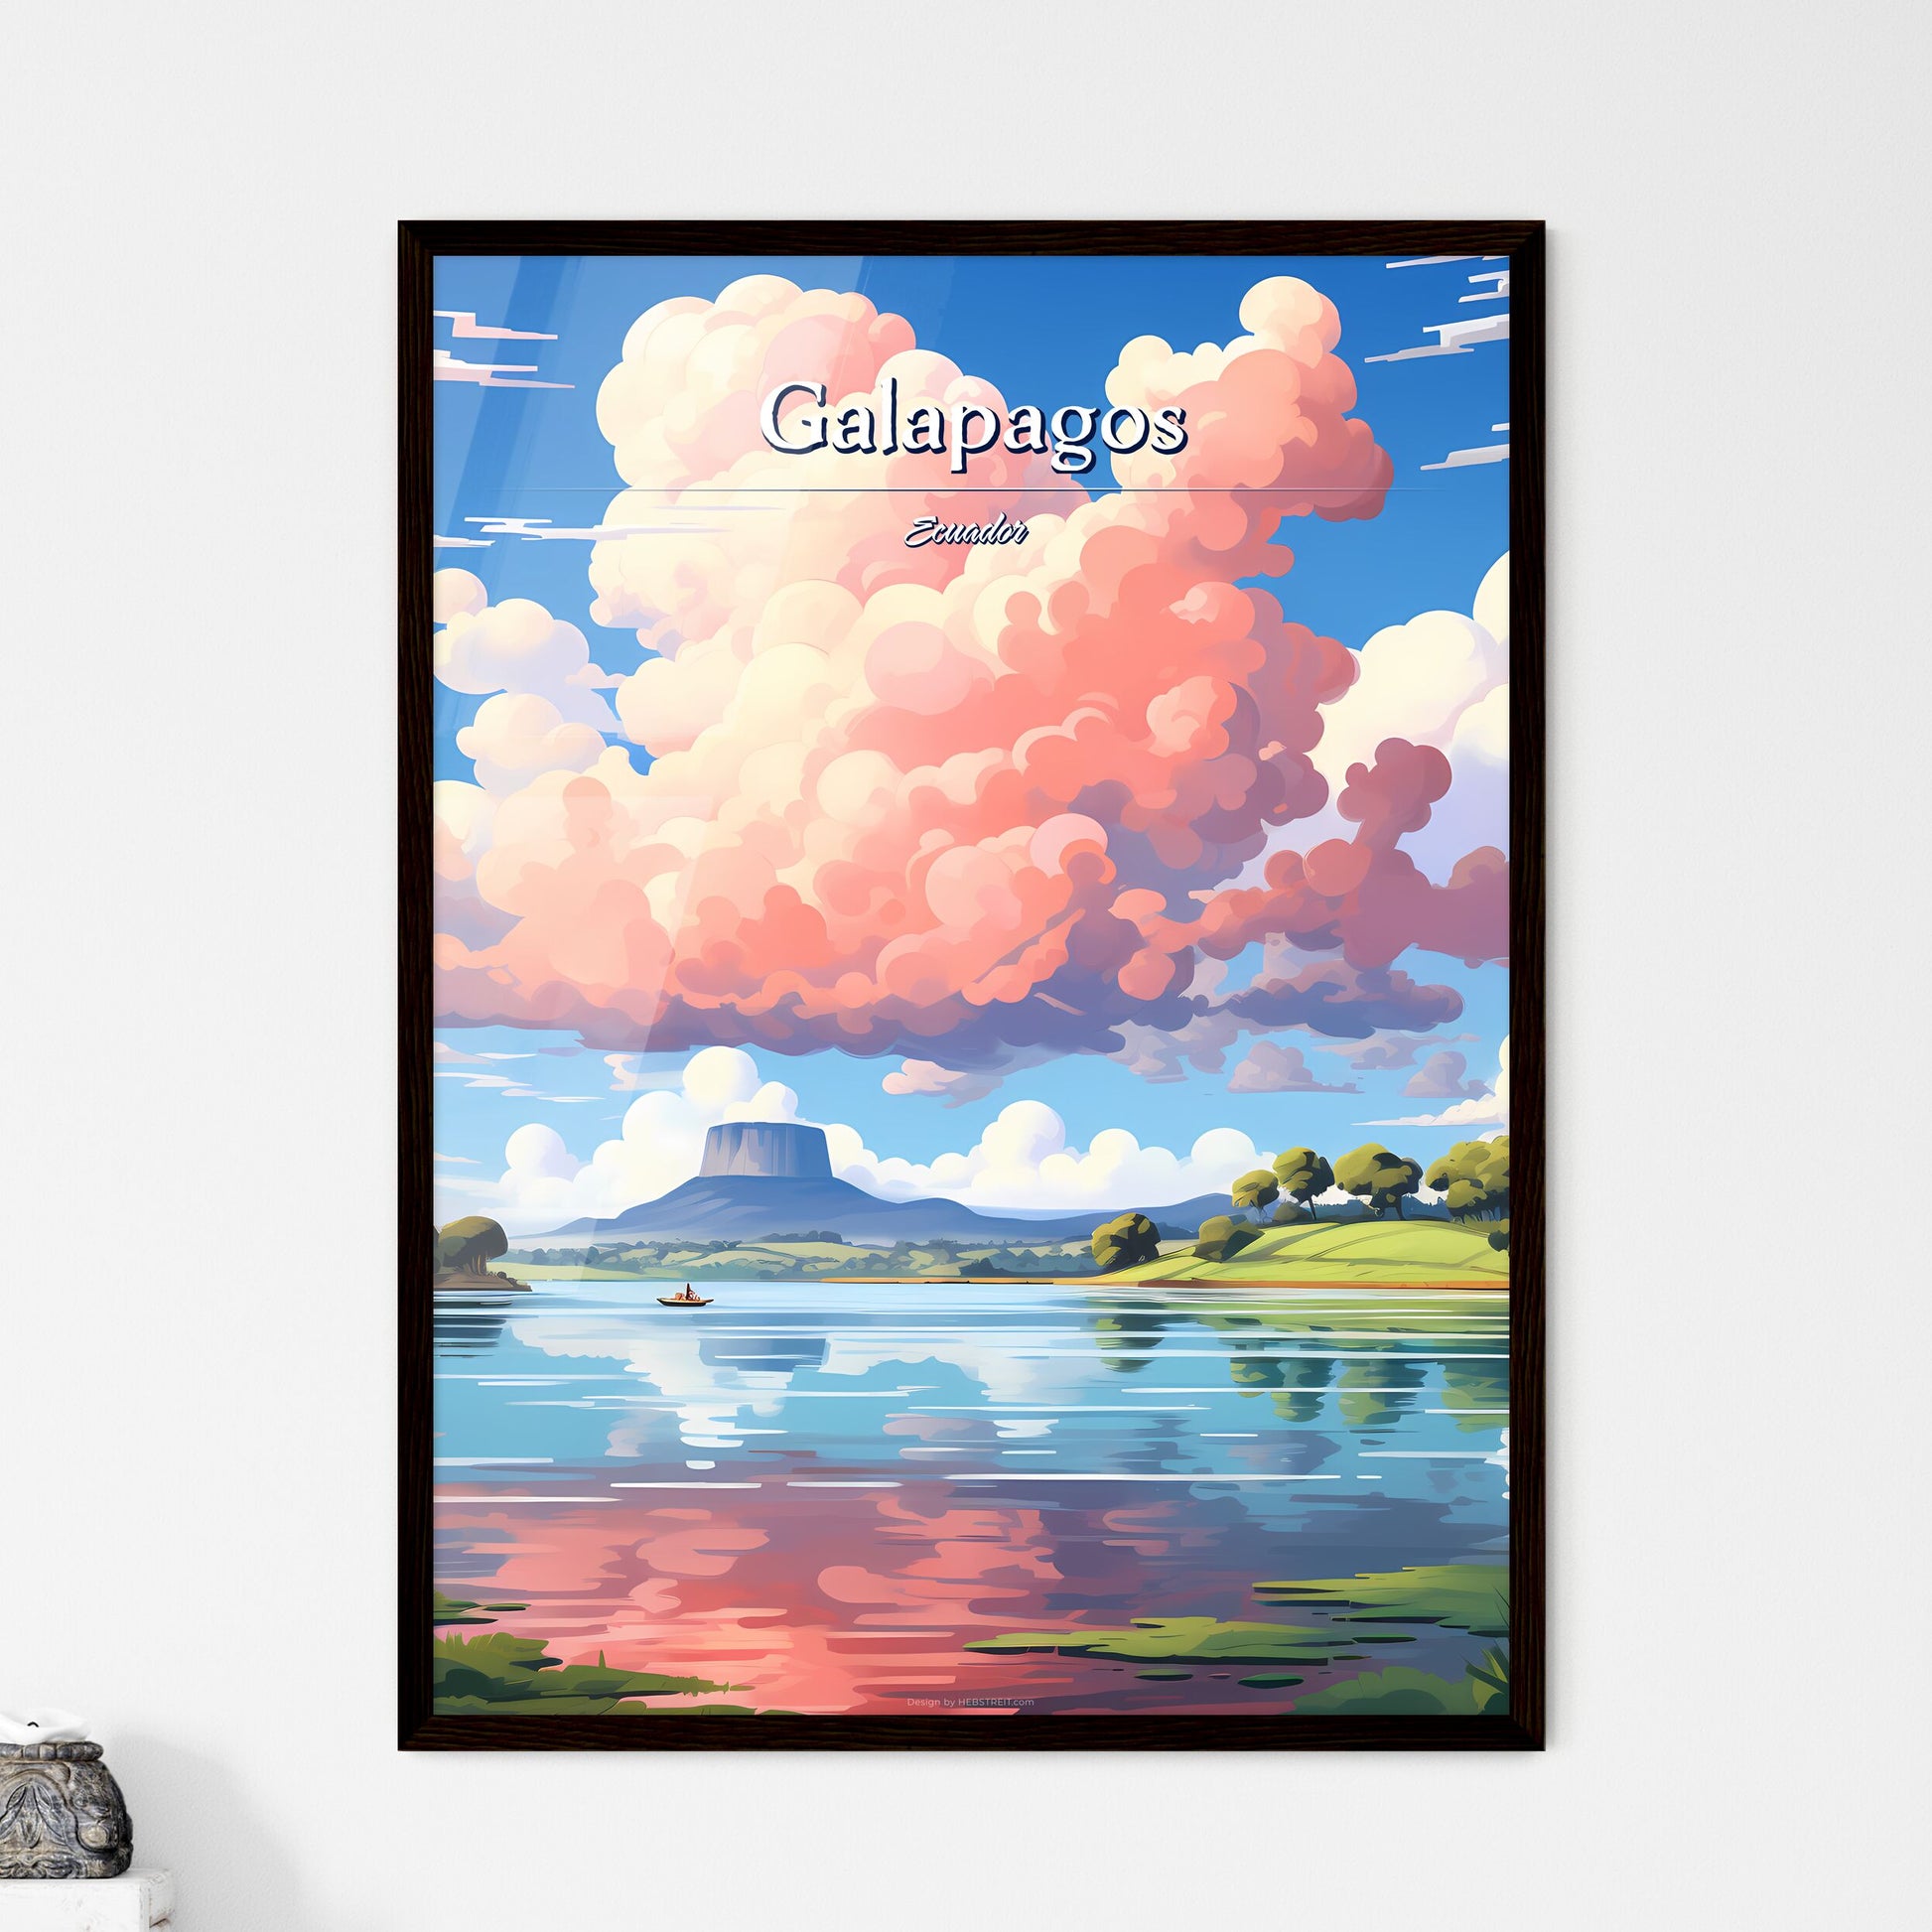 Galapagos, Ecuador - Art print of a pink clouds over a lake Default Title